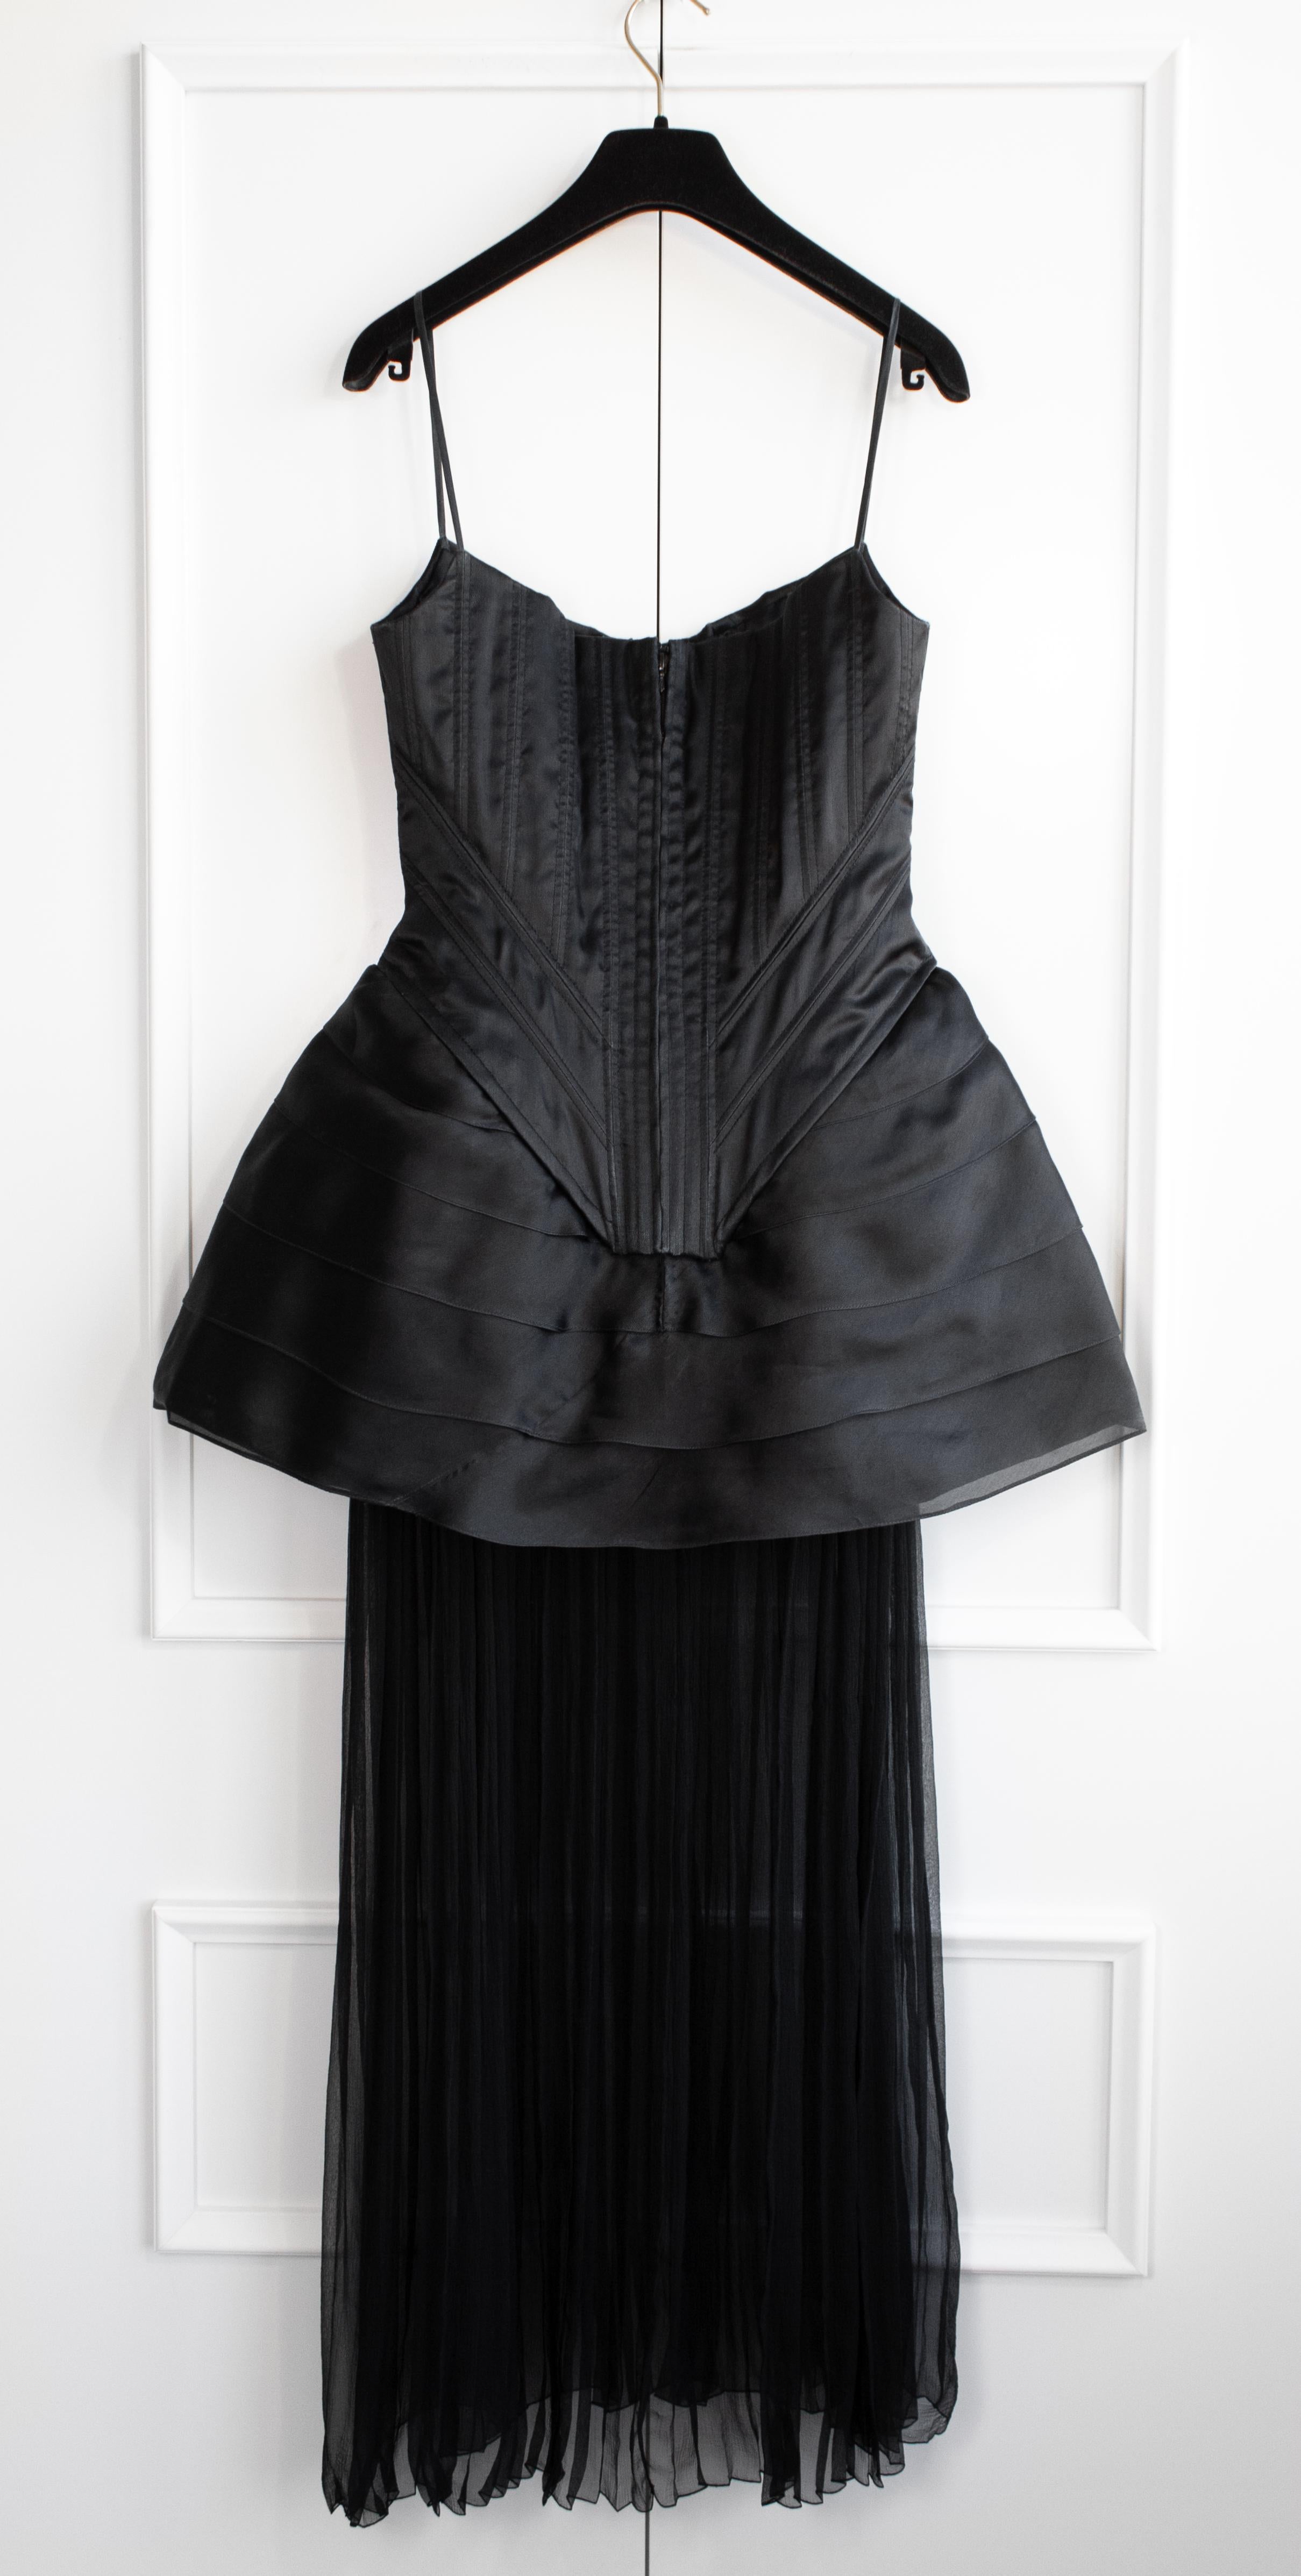 Chanel Vintage Haute Couture Fall/Winter 1992 Black Satin Corset Gown Dress 2